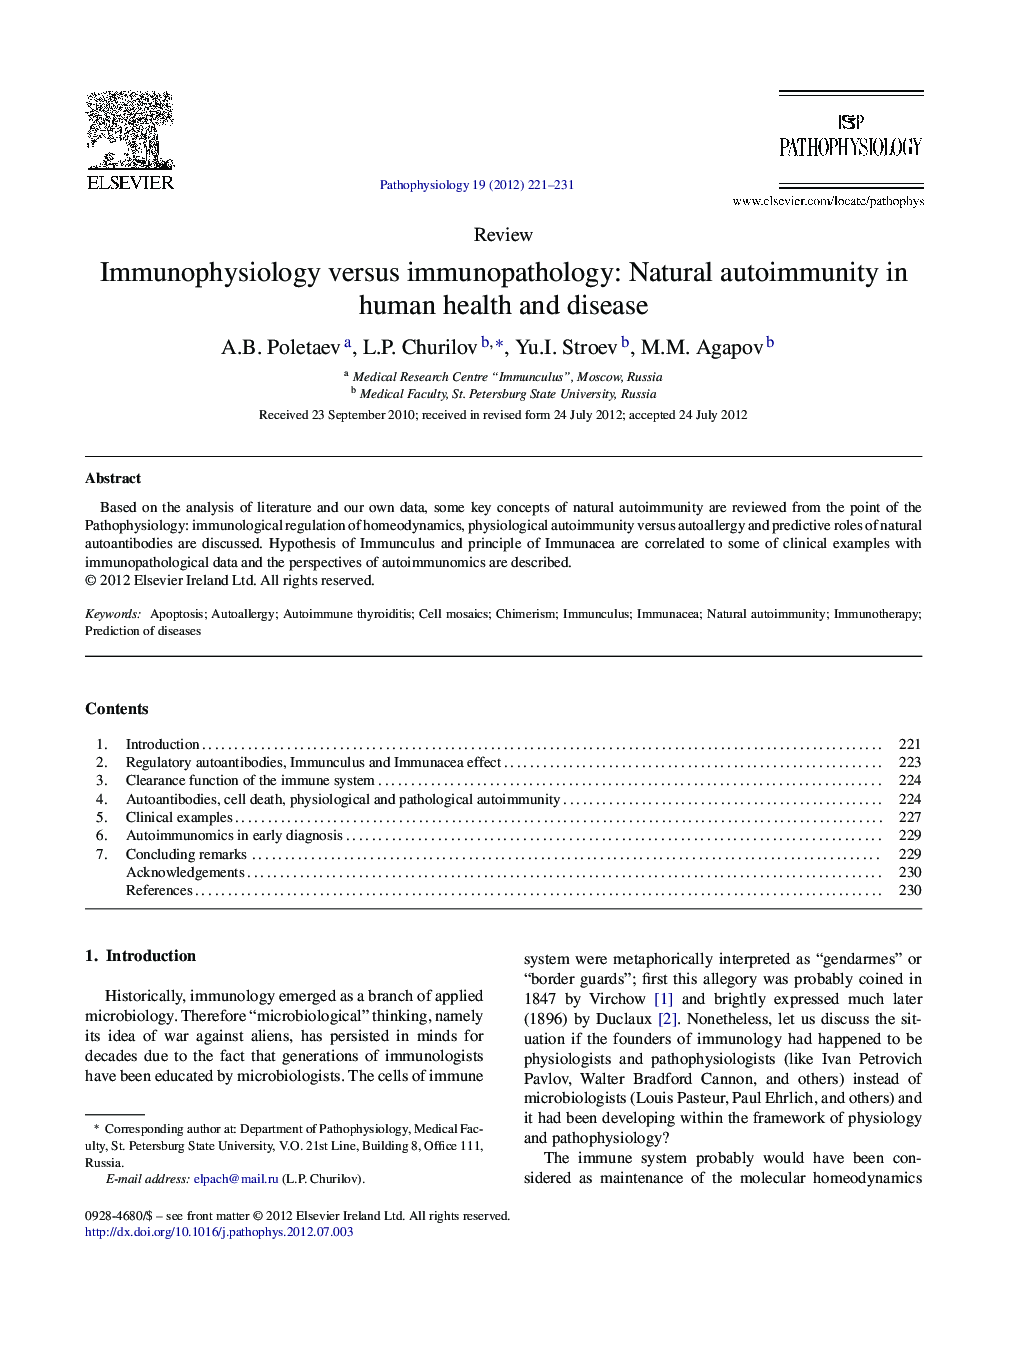 Immunophysiology versus immunopathology: Natural autoimmunity in human health and disease